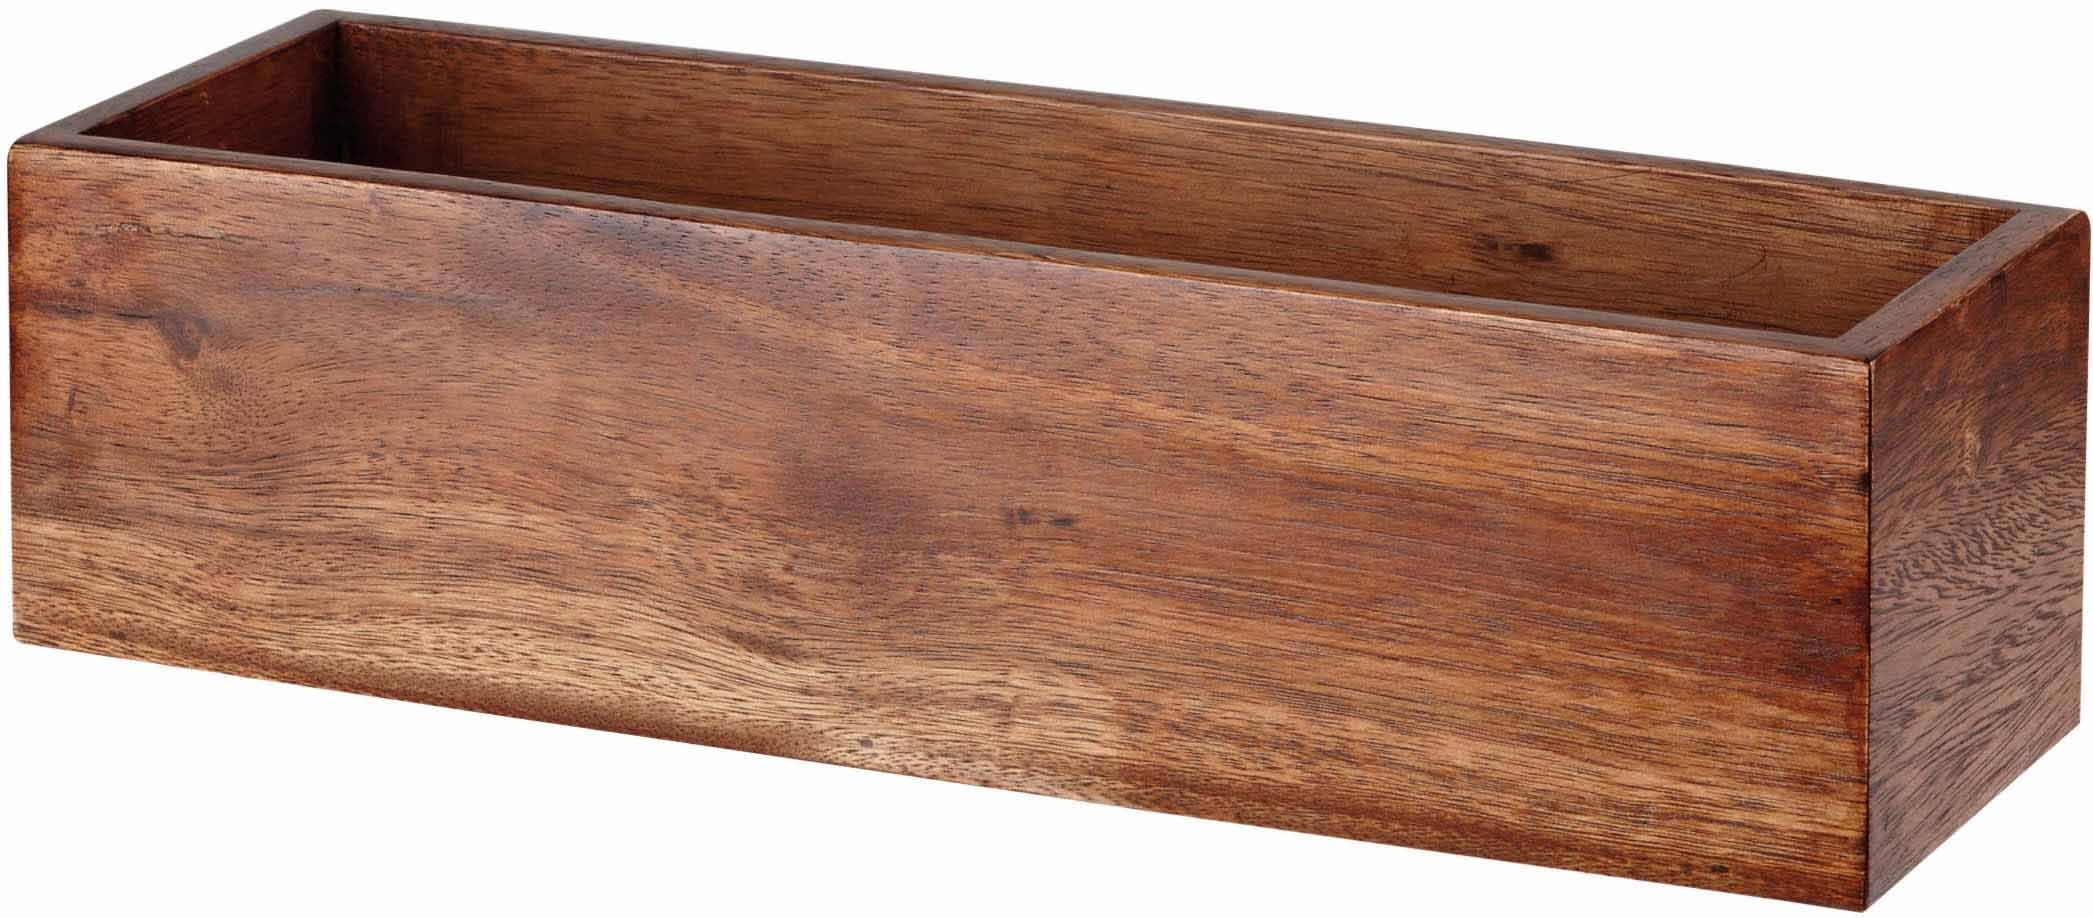 Suport rectangular din lemn de acaccia, Acaccia Moonstone, dimensiuni 560x180x200mm